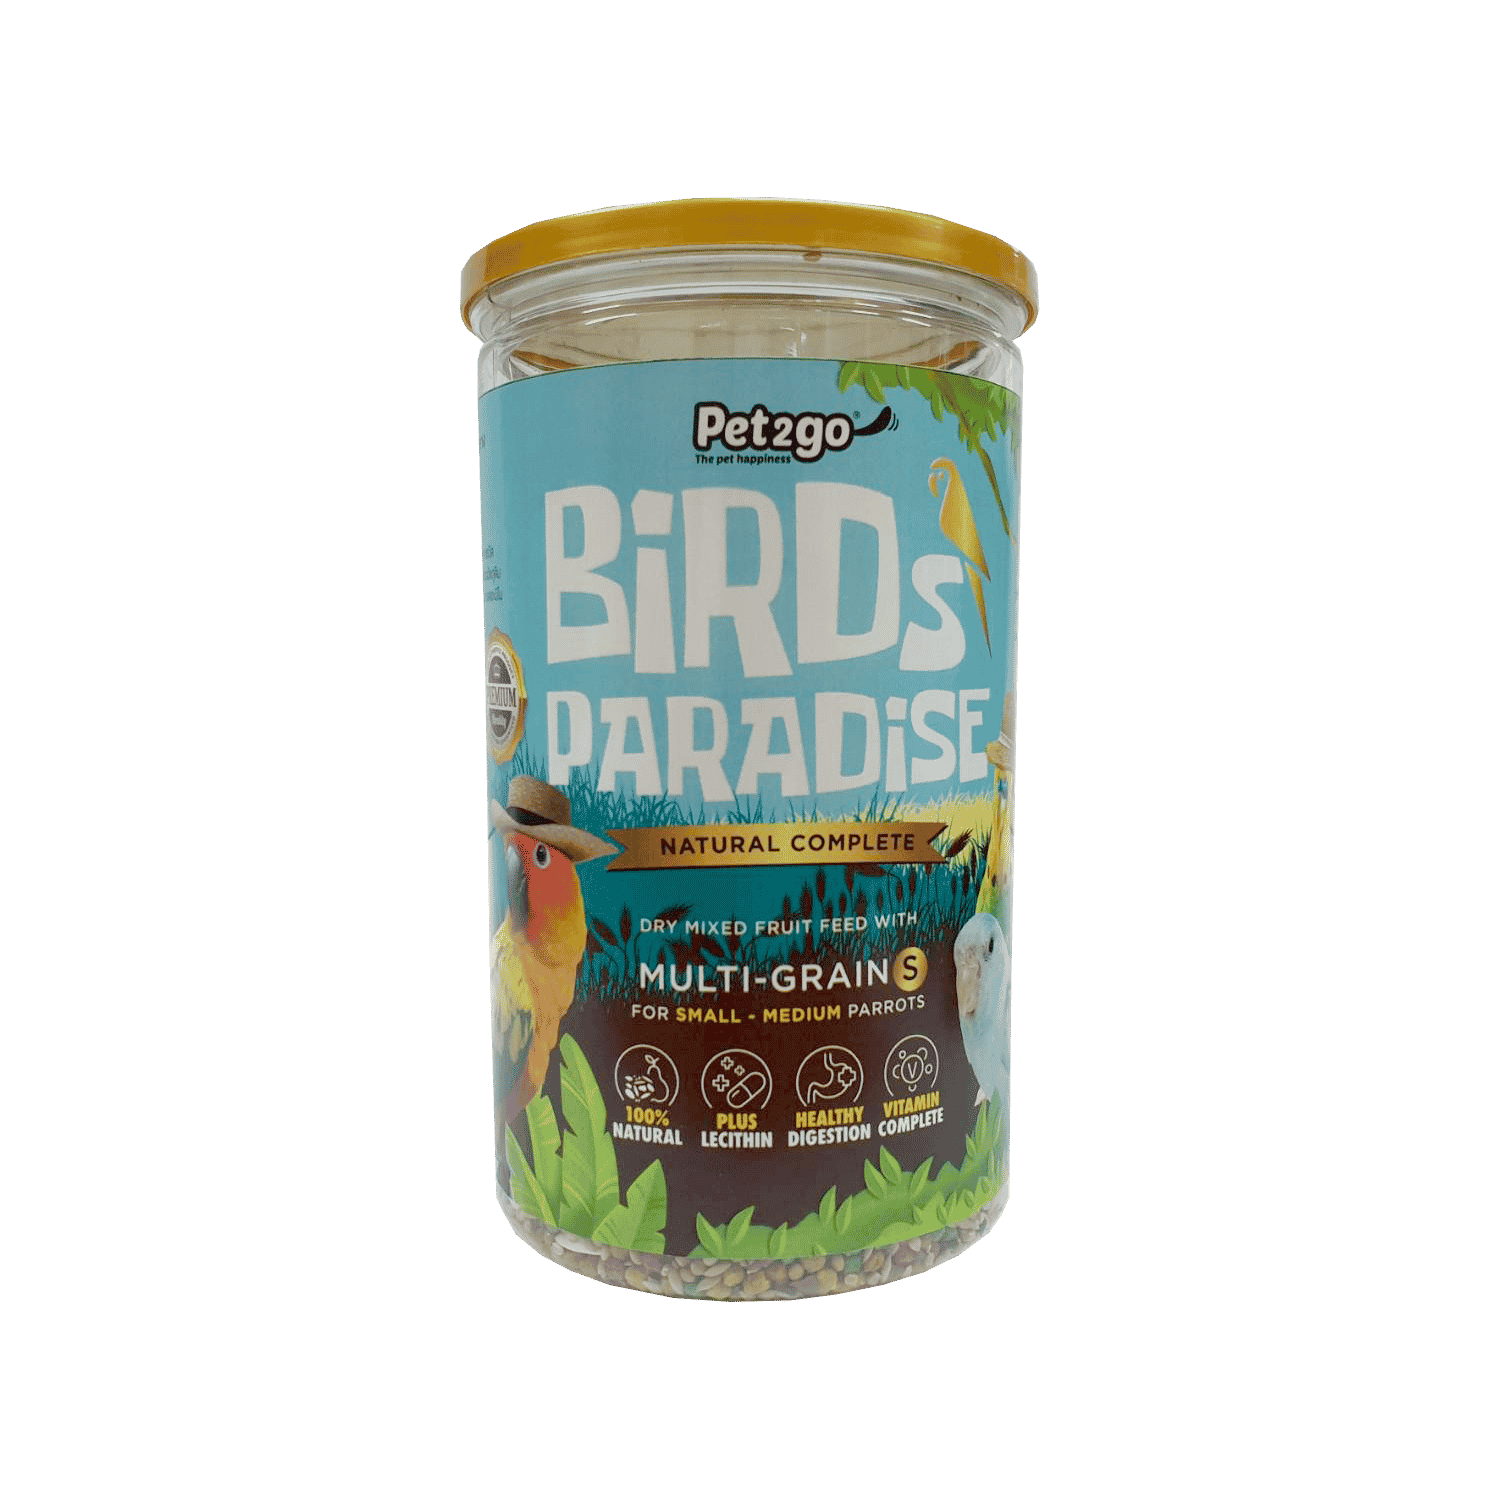 birds paradise multi-grain